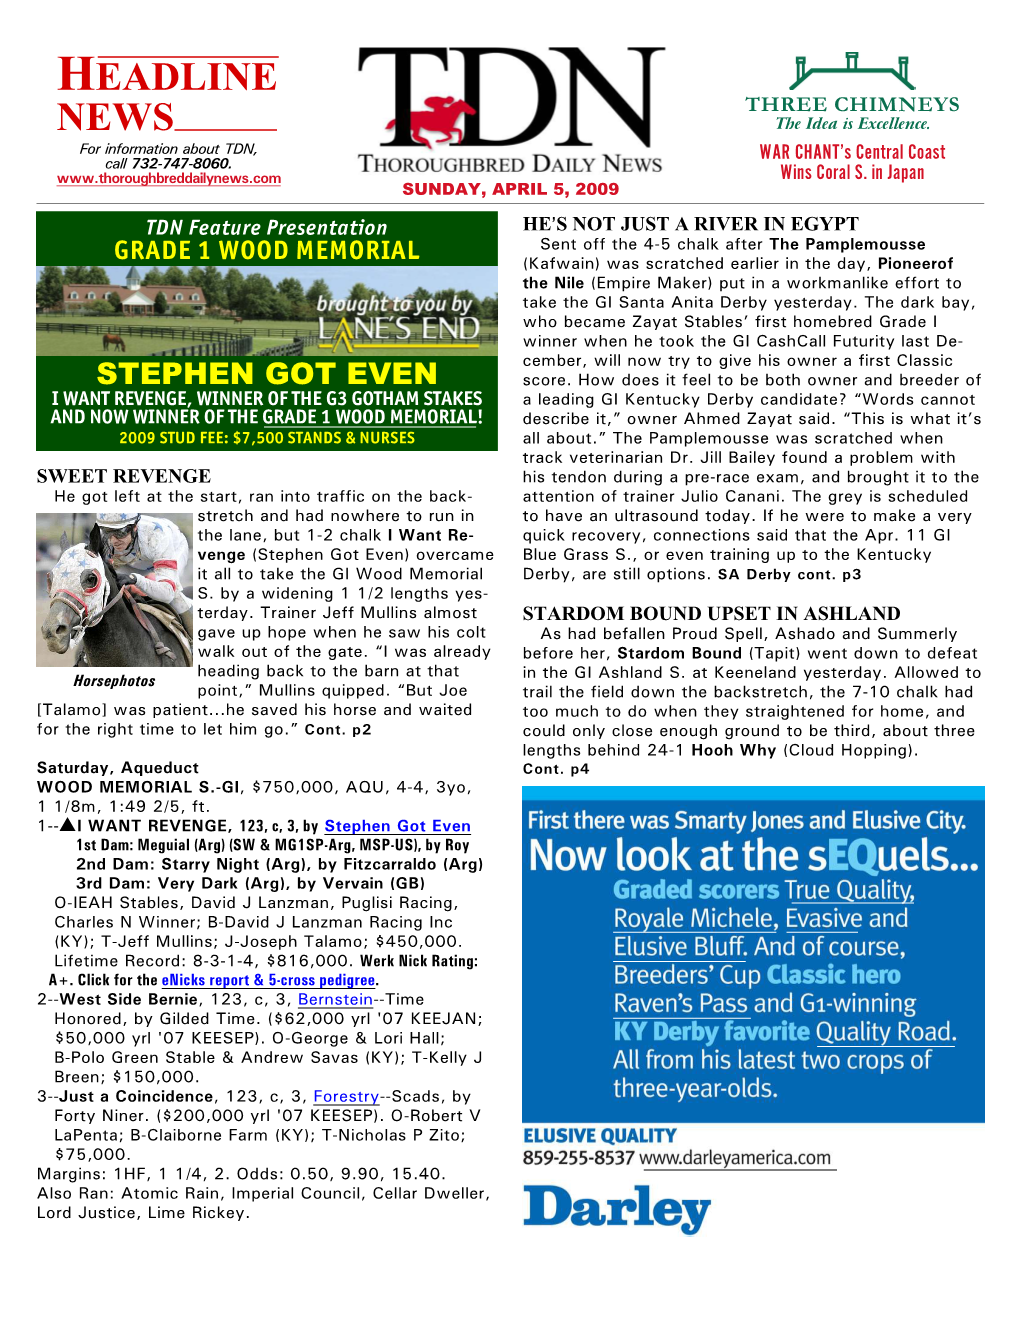 HEADLINE NEWS • 4/5/09 • PAGE 2 of 17